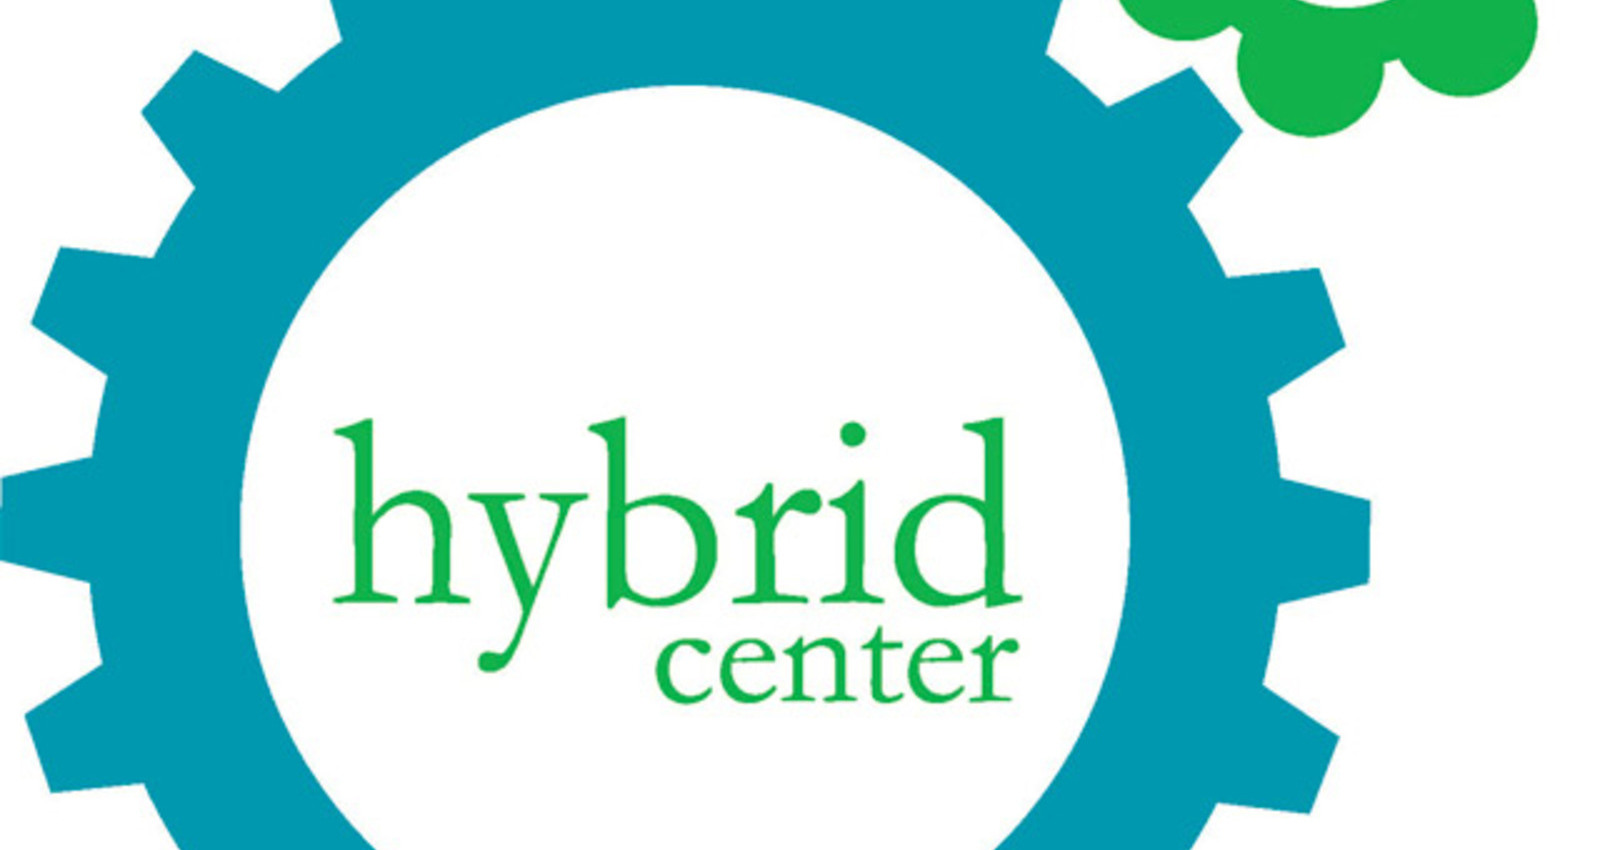 Hybrid center create nature